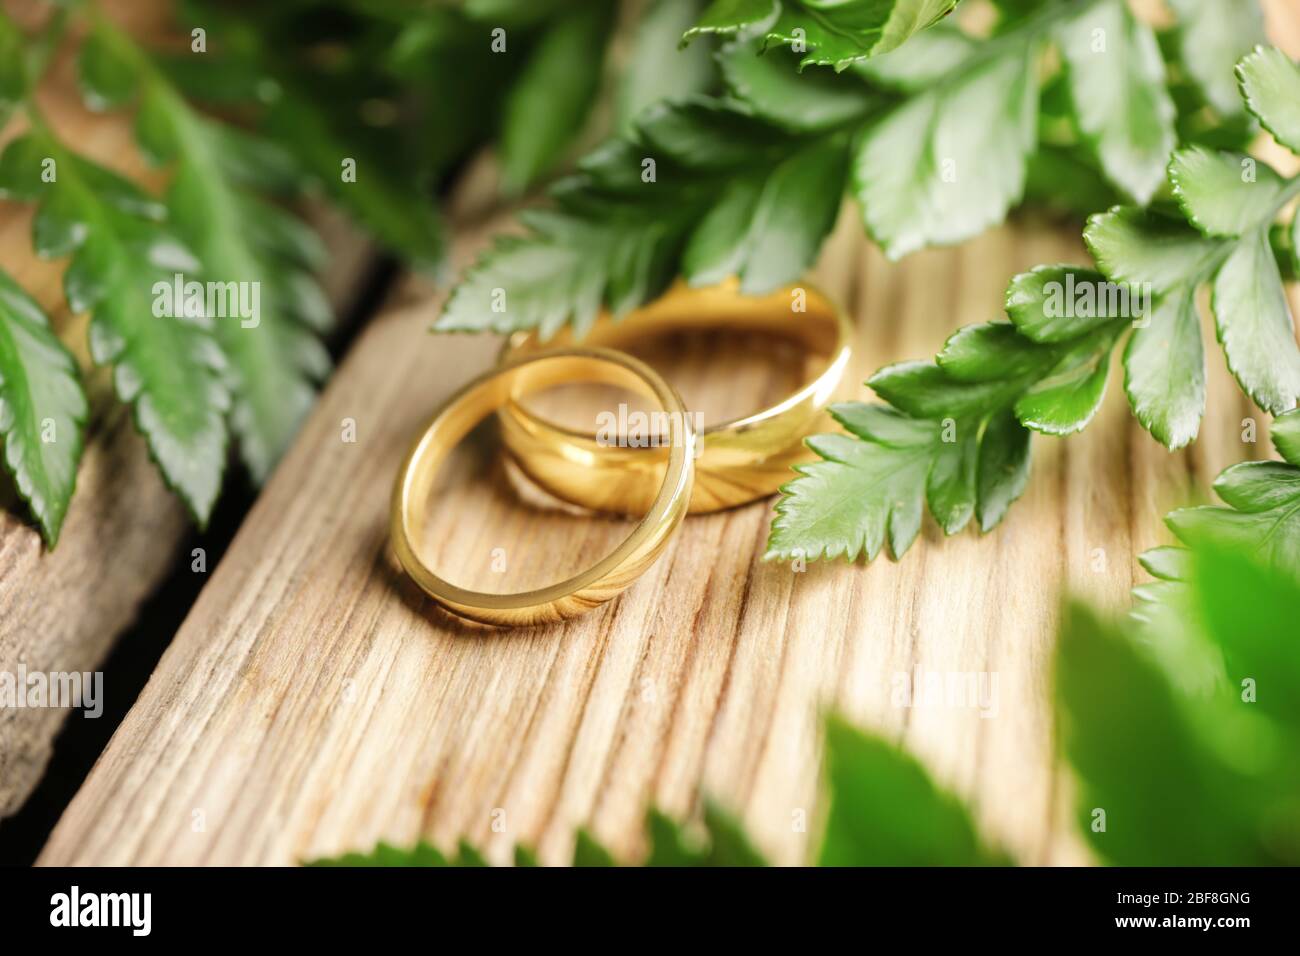 Wedding Ring Photography | 10 Tips and Creative Ideas for Better Photos -  Adorama